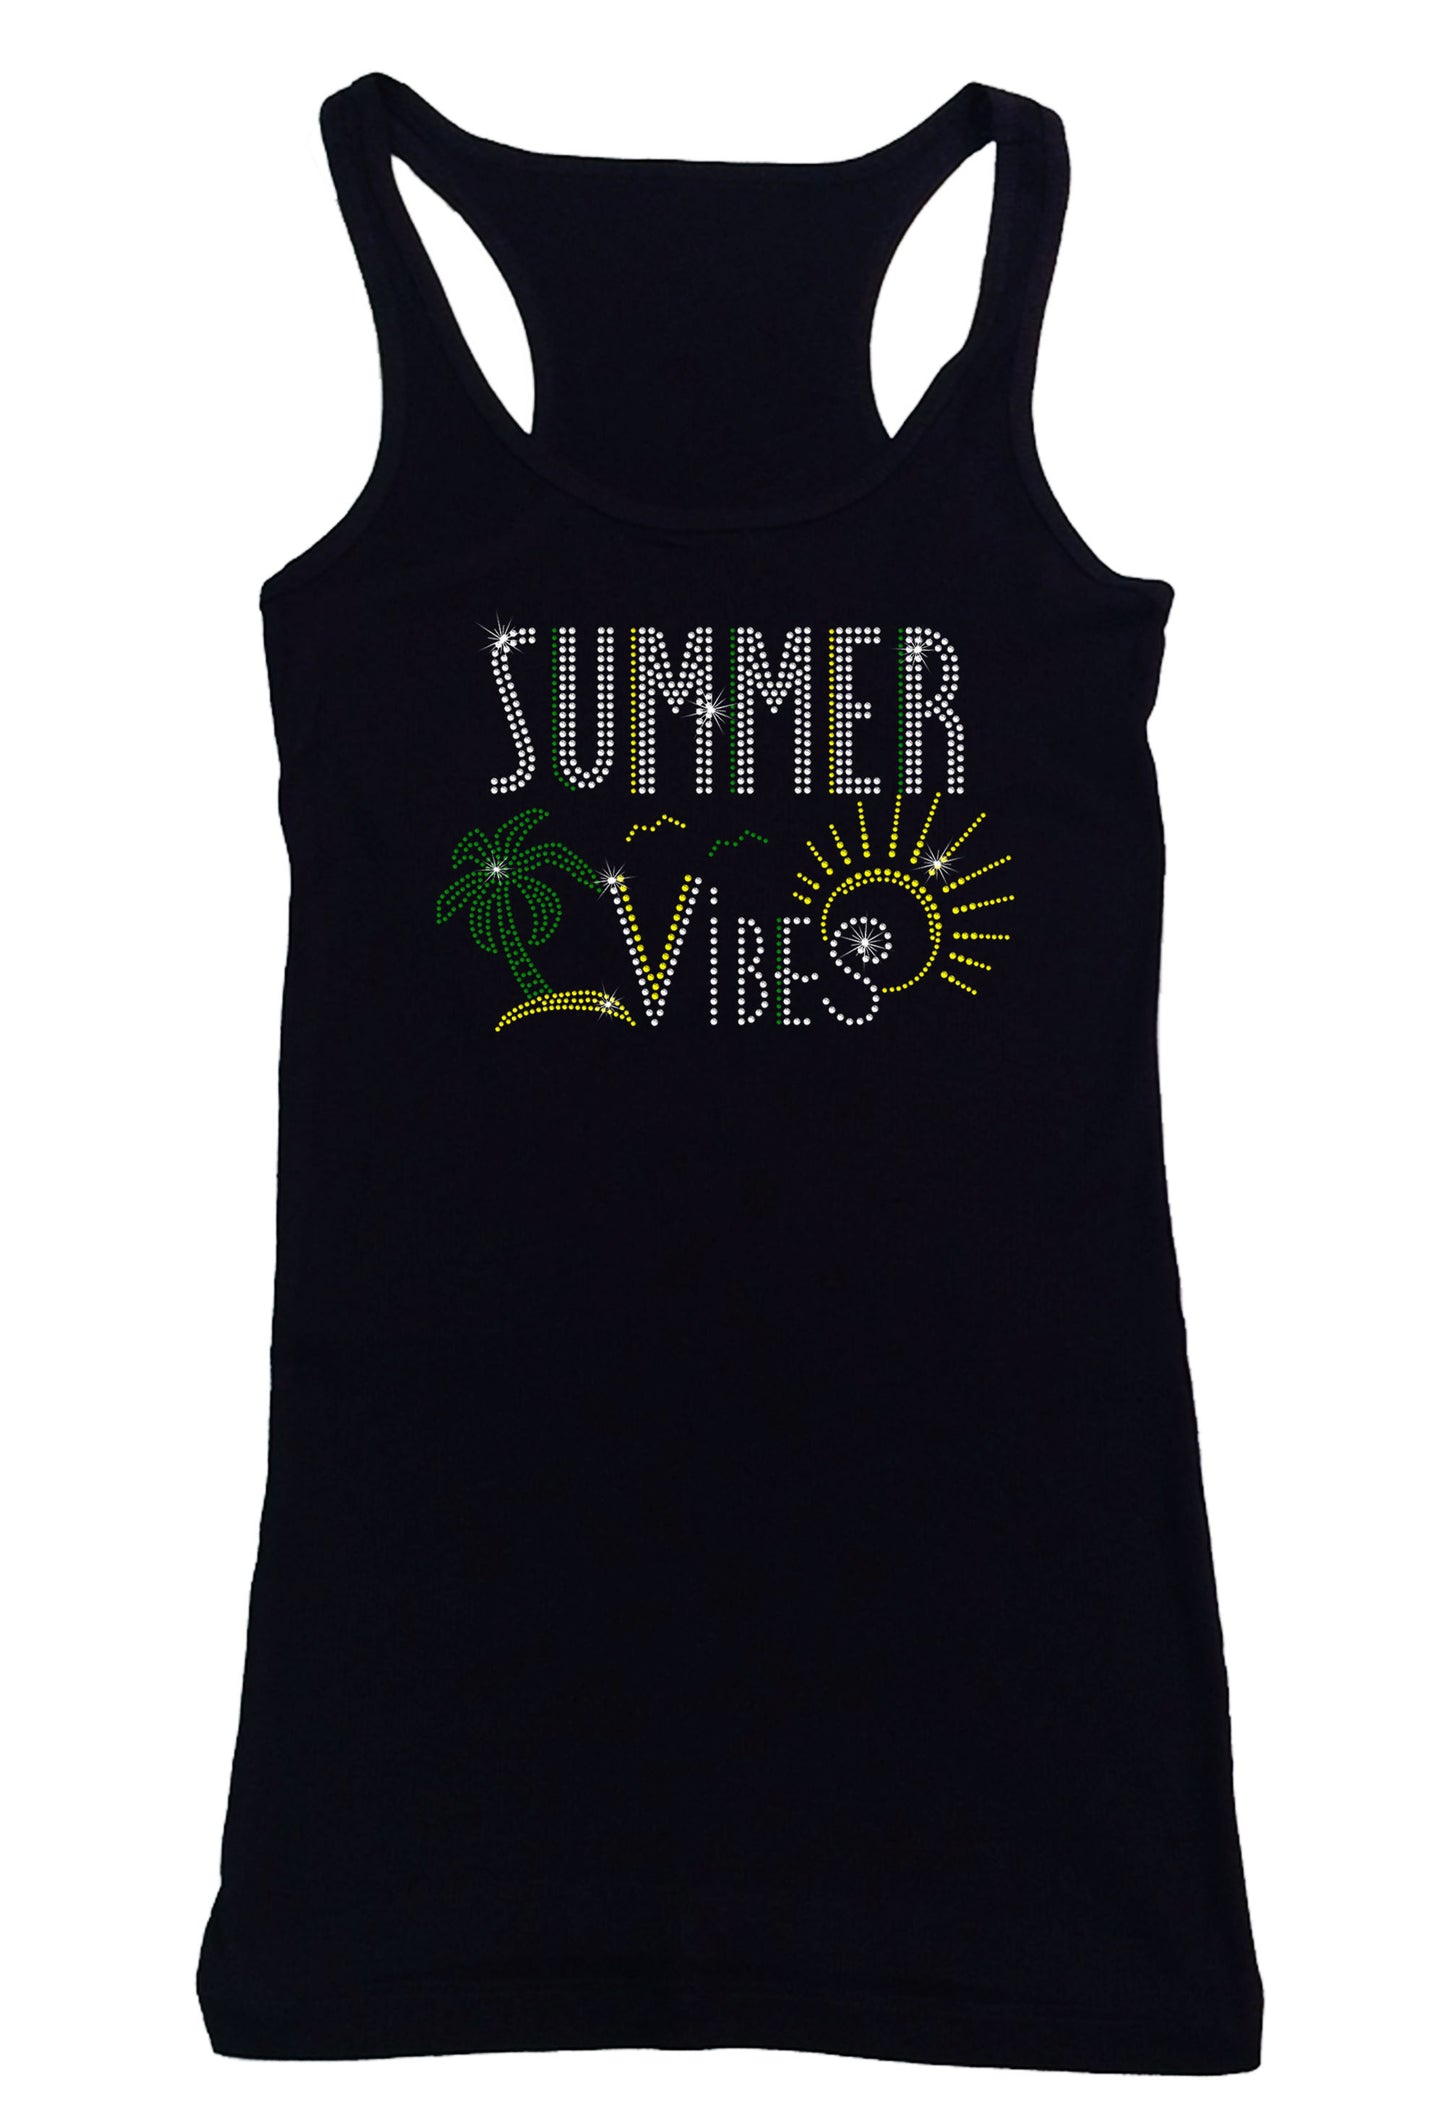 Women's Rhinestone Fitted Tight Snug Shirt Summer Vibes - Sunshine and Palm Tree Summer Shirt